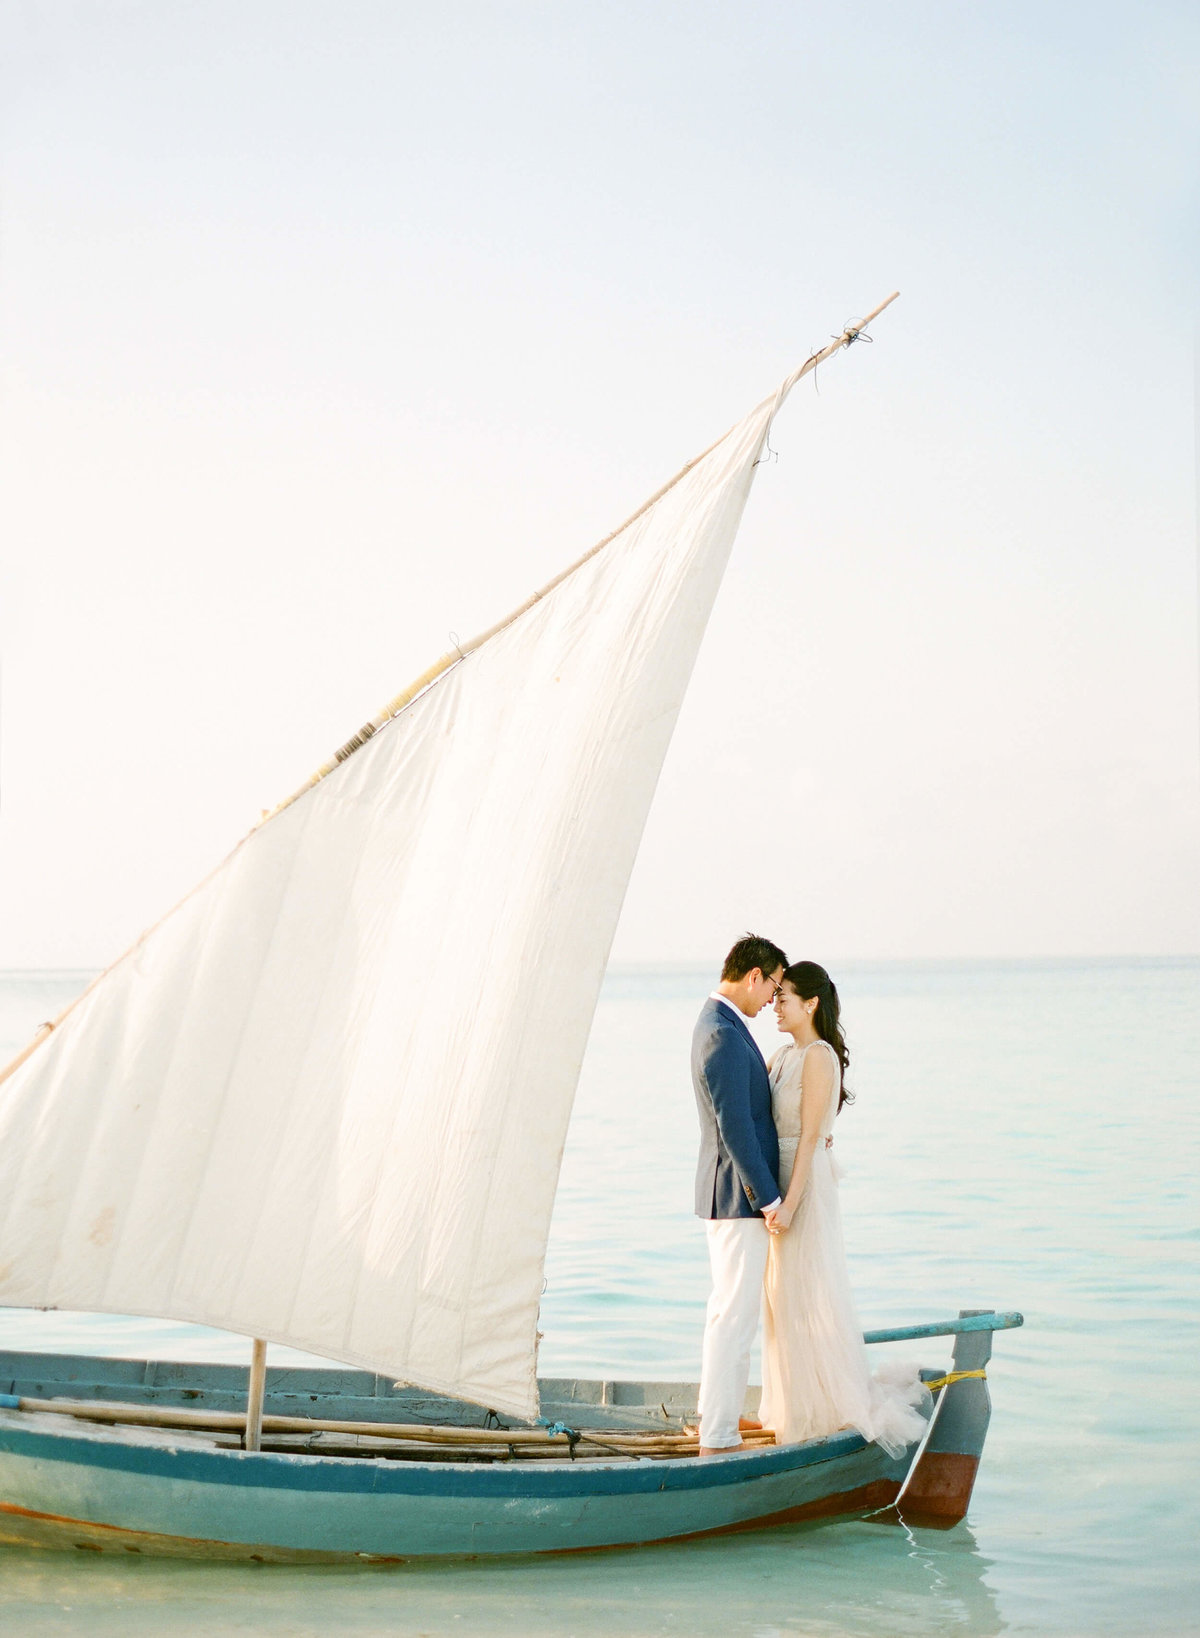 14-KTMerry-destinationwedding-Maldives-sailboat-portrait